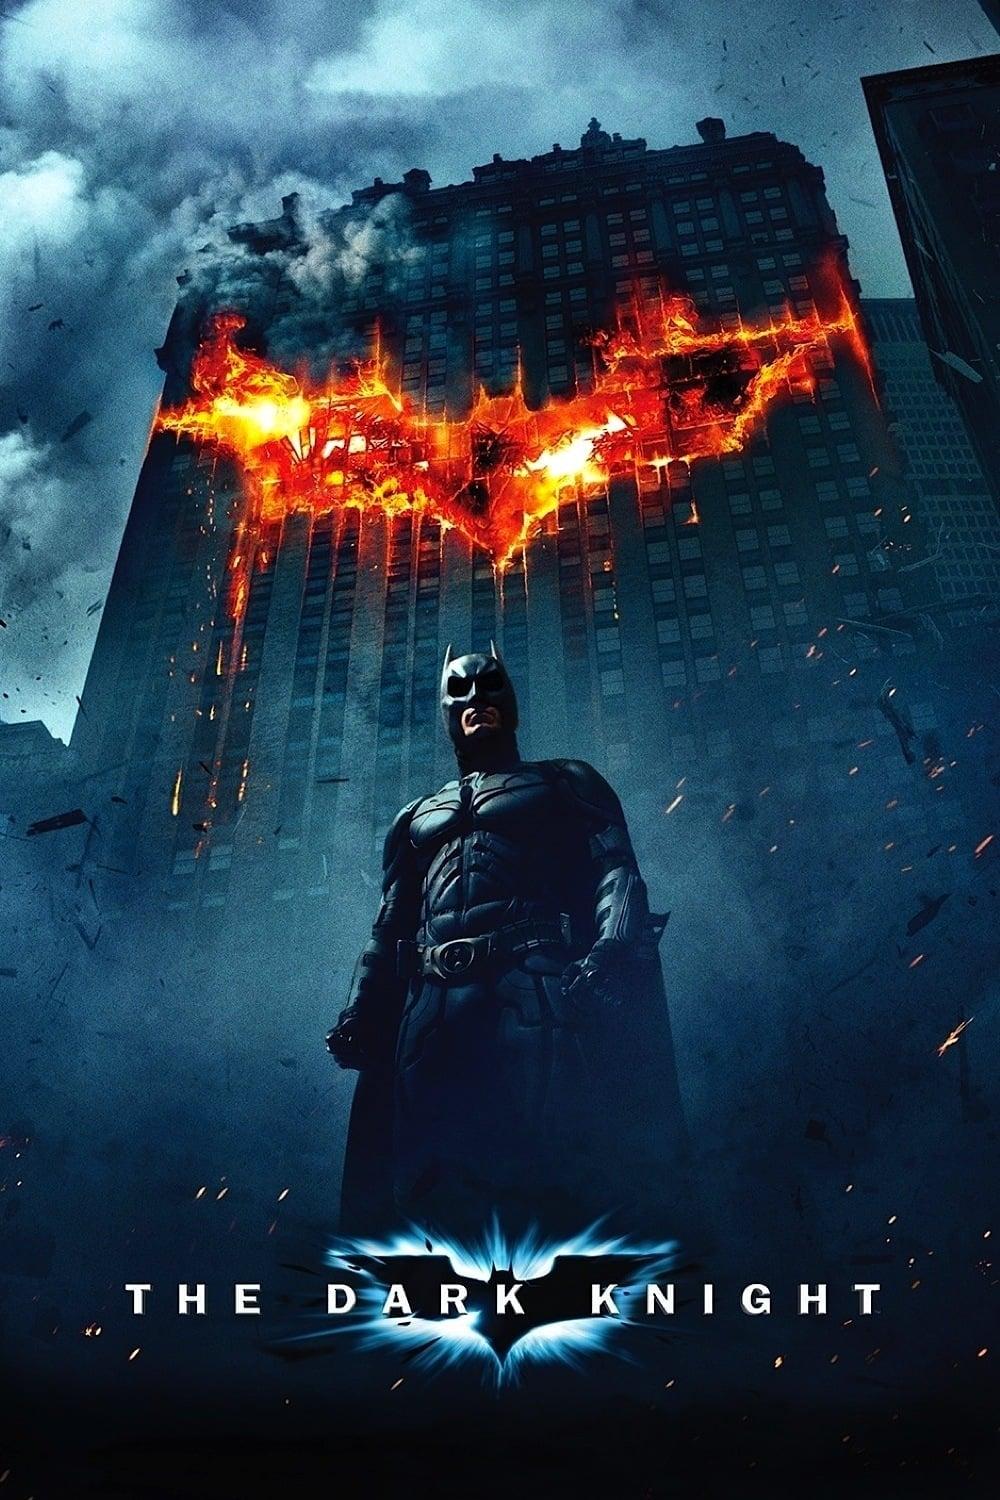 Movie poster of "The Dark Knight"